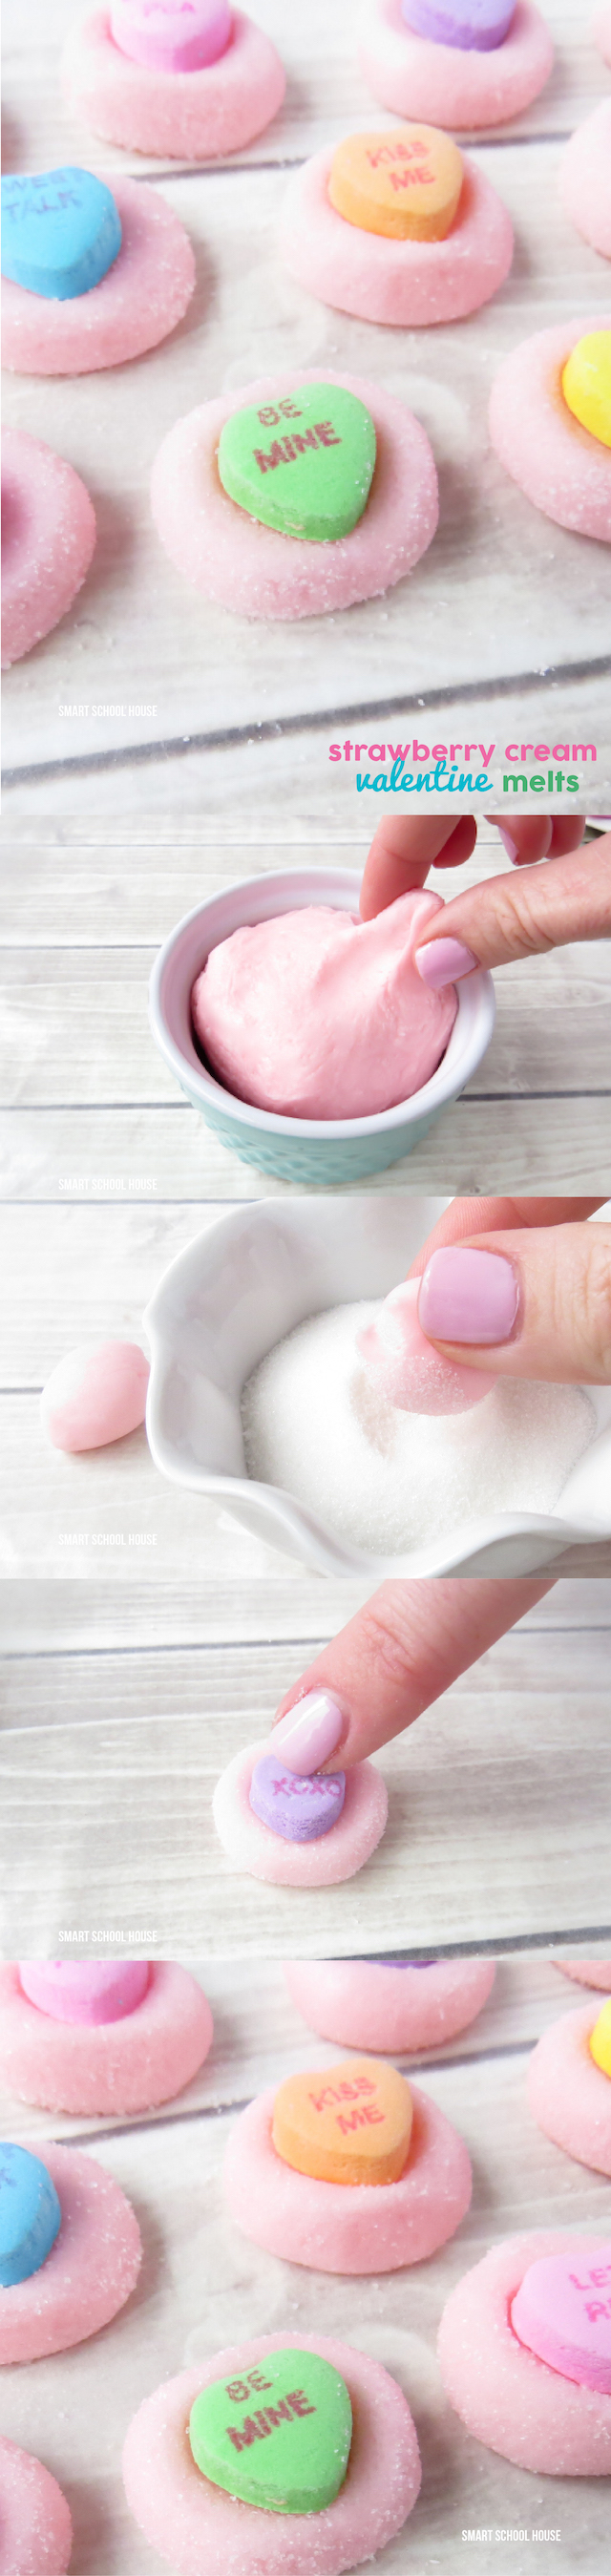 Strawberry Cream Valentine Melts. An easy Valentine recipe!